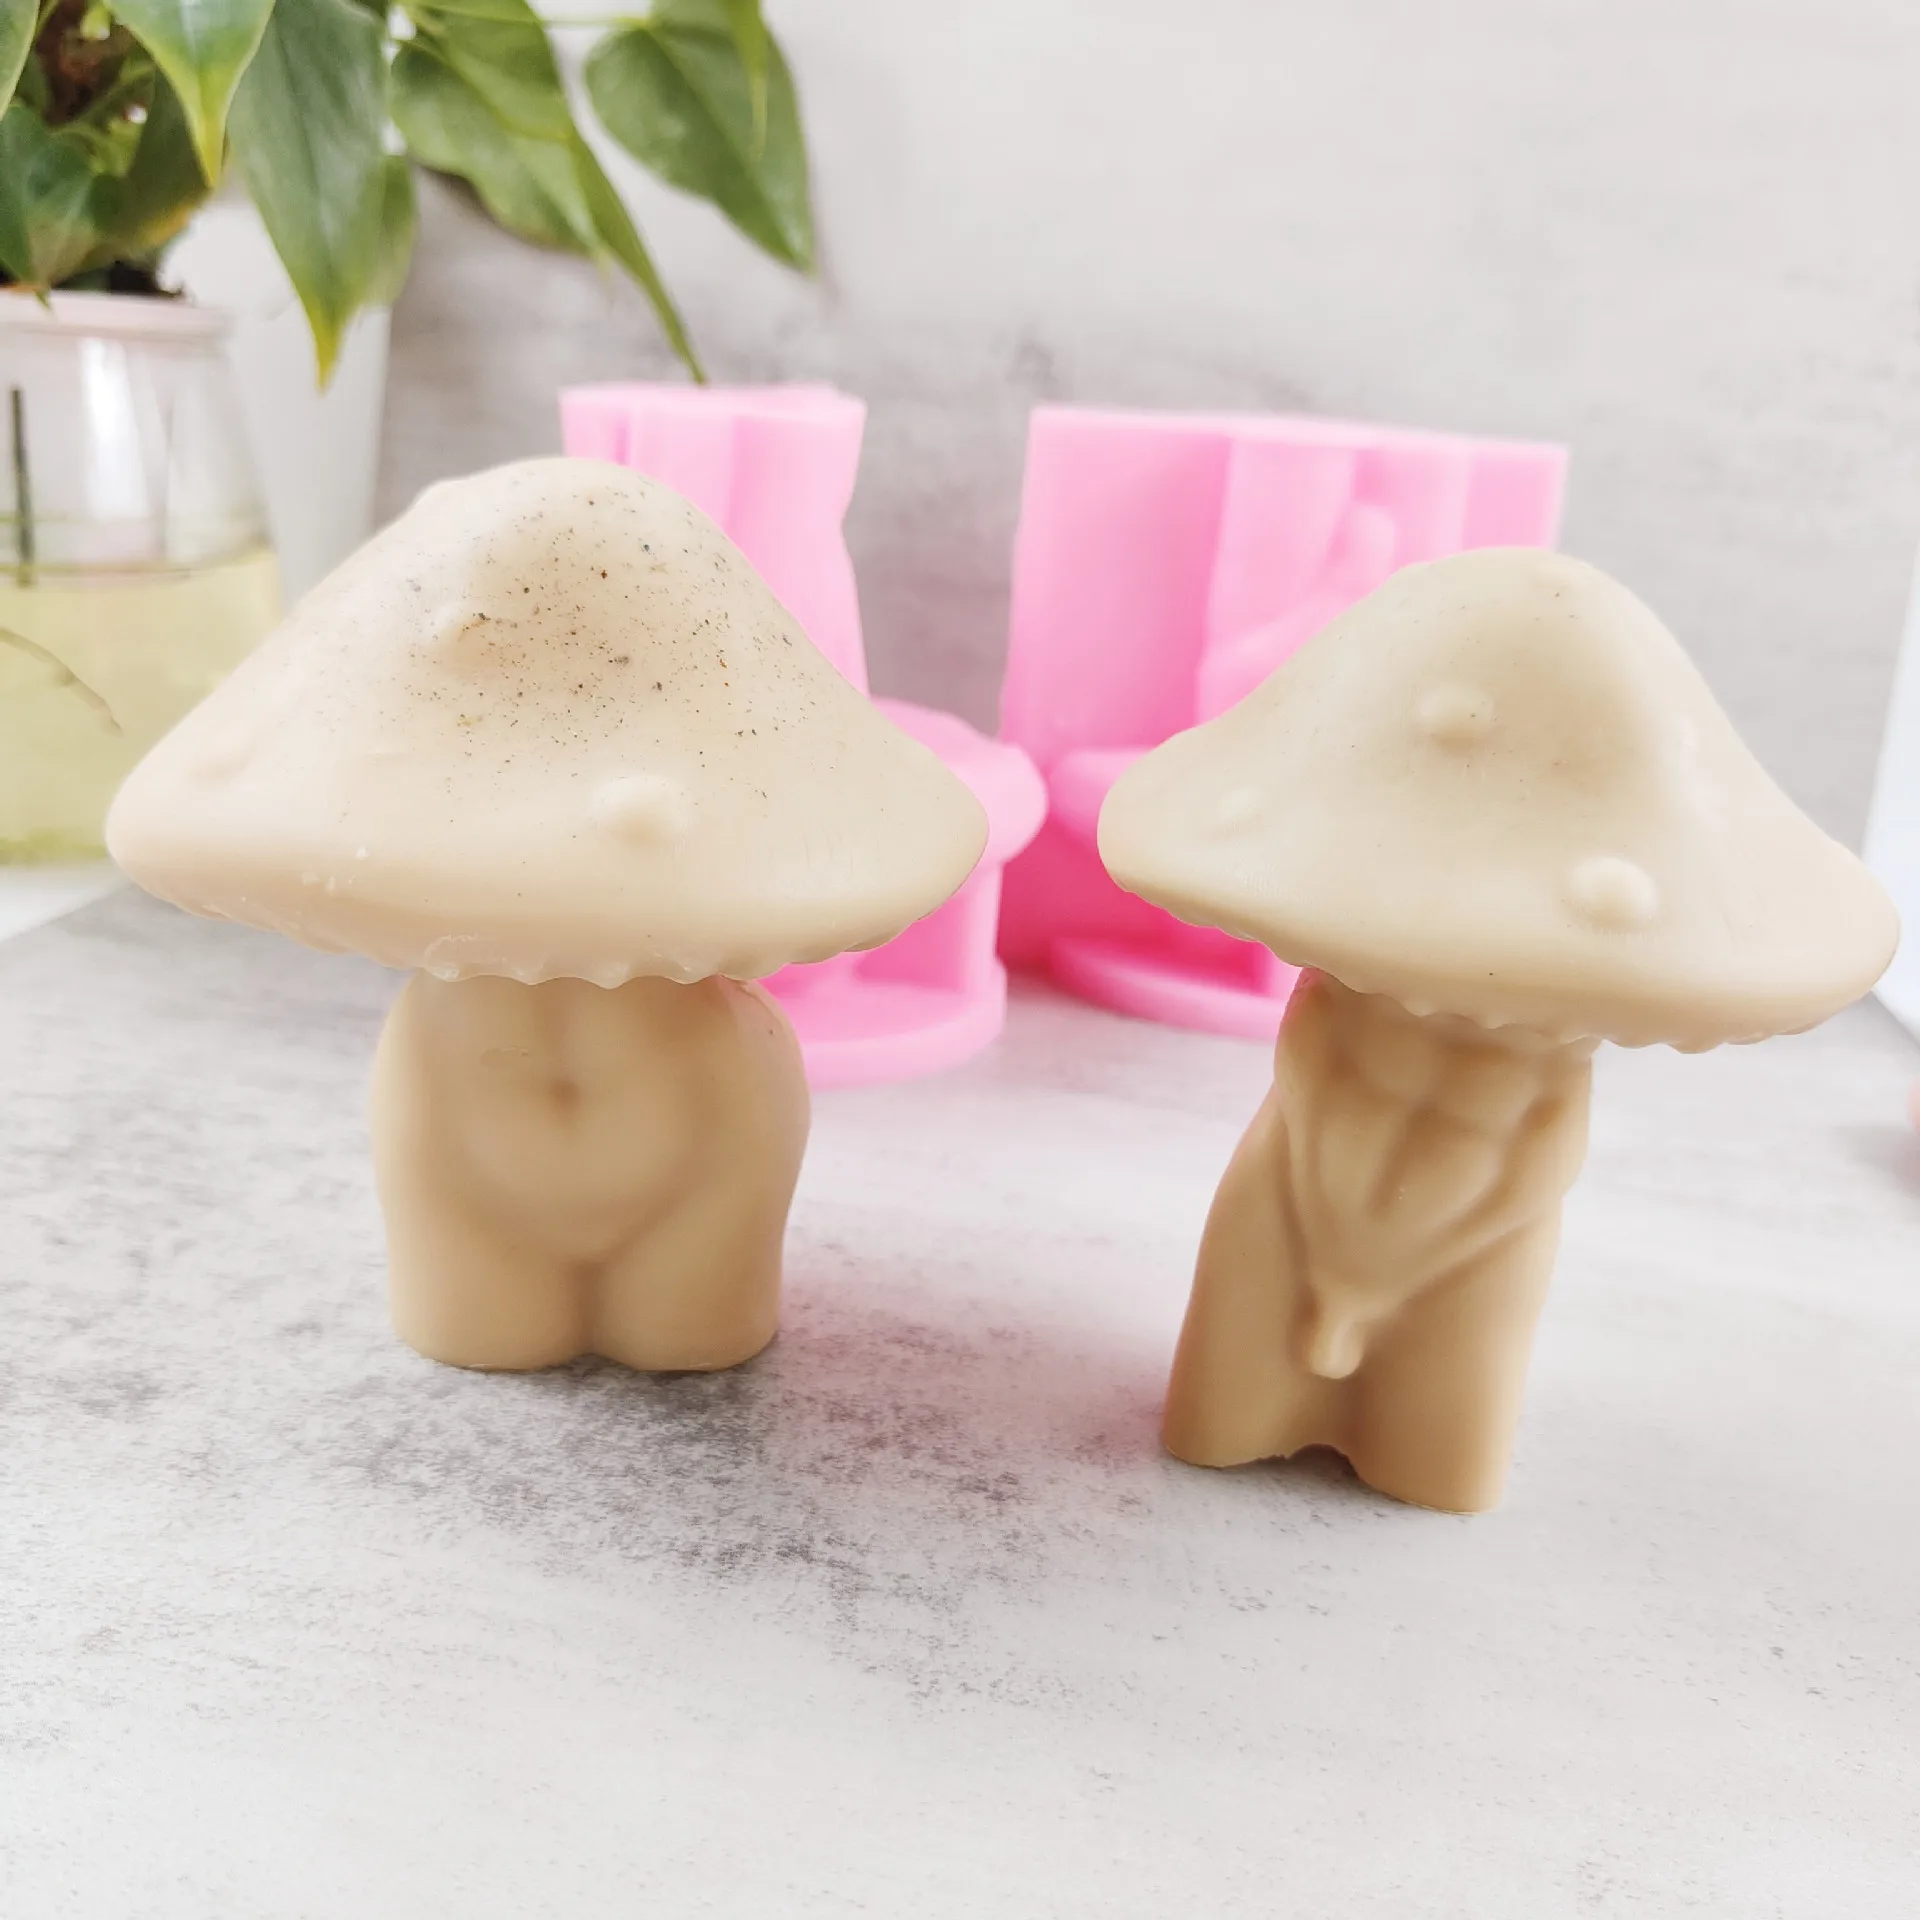 

Mushroom Human Body Candle Silicone Mold Gypsum form Carving Art Aromatherapy Plaster Home Decoration Mold Wedding Gift Handmade